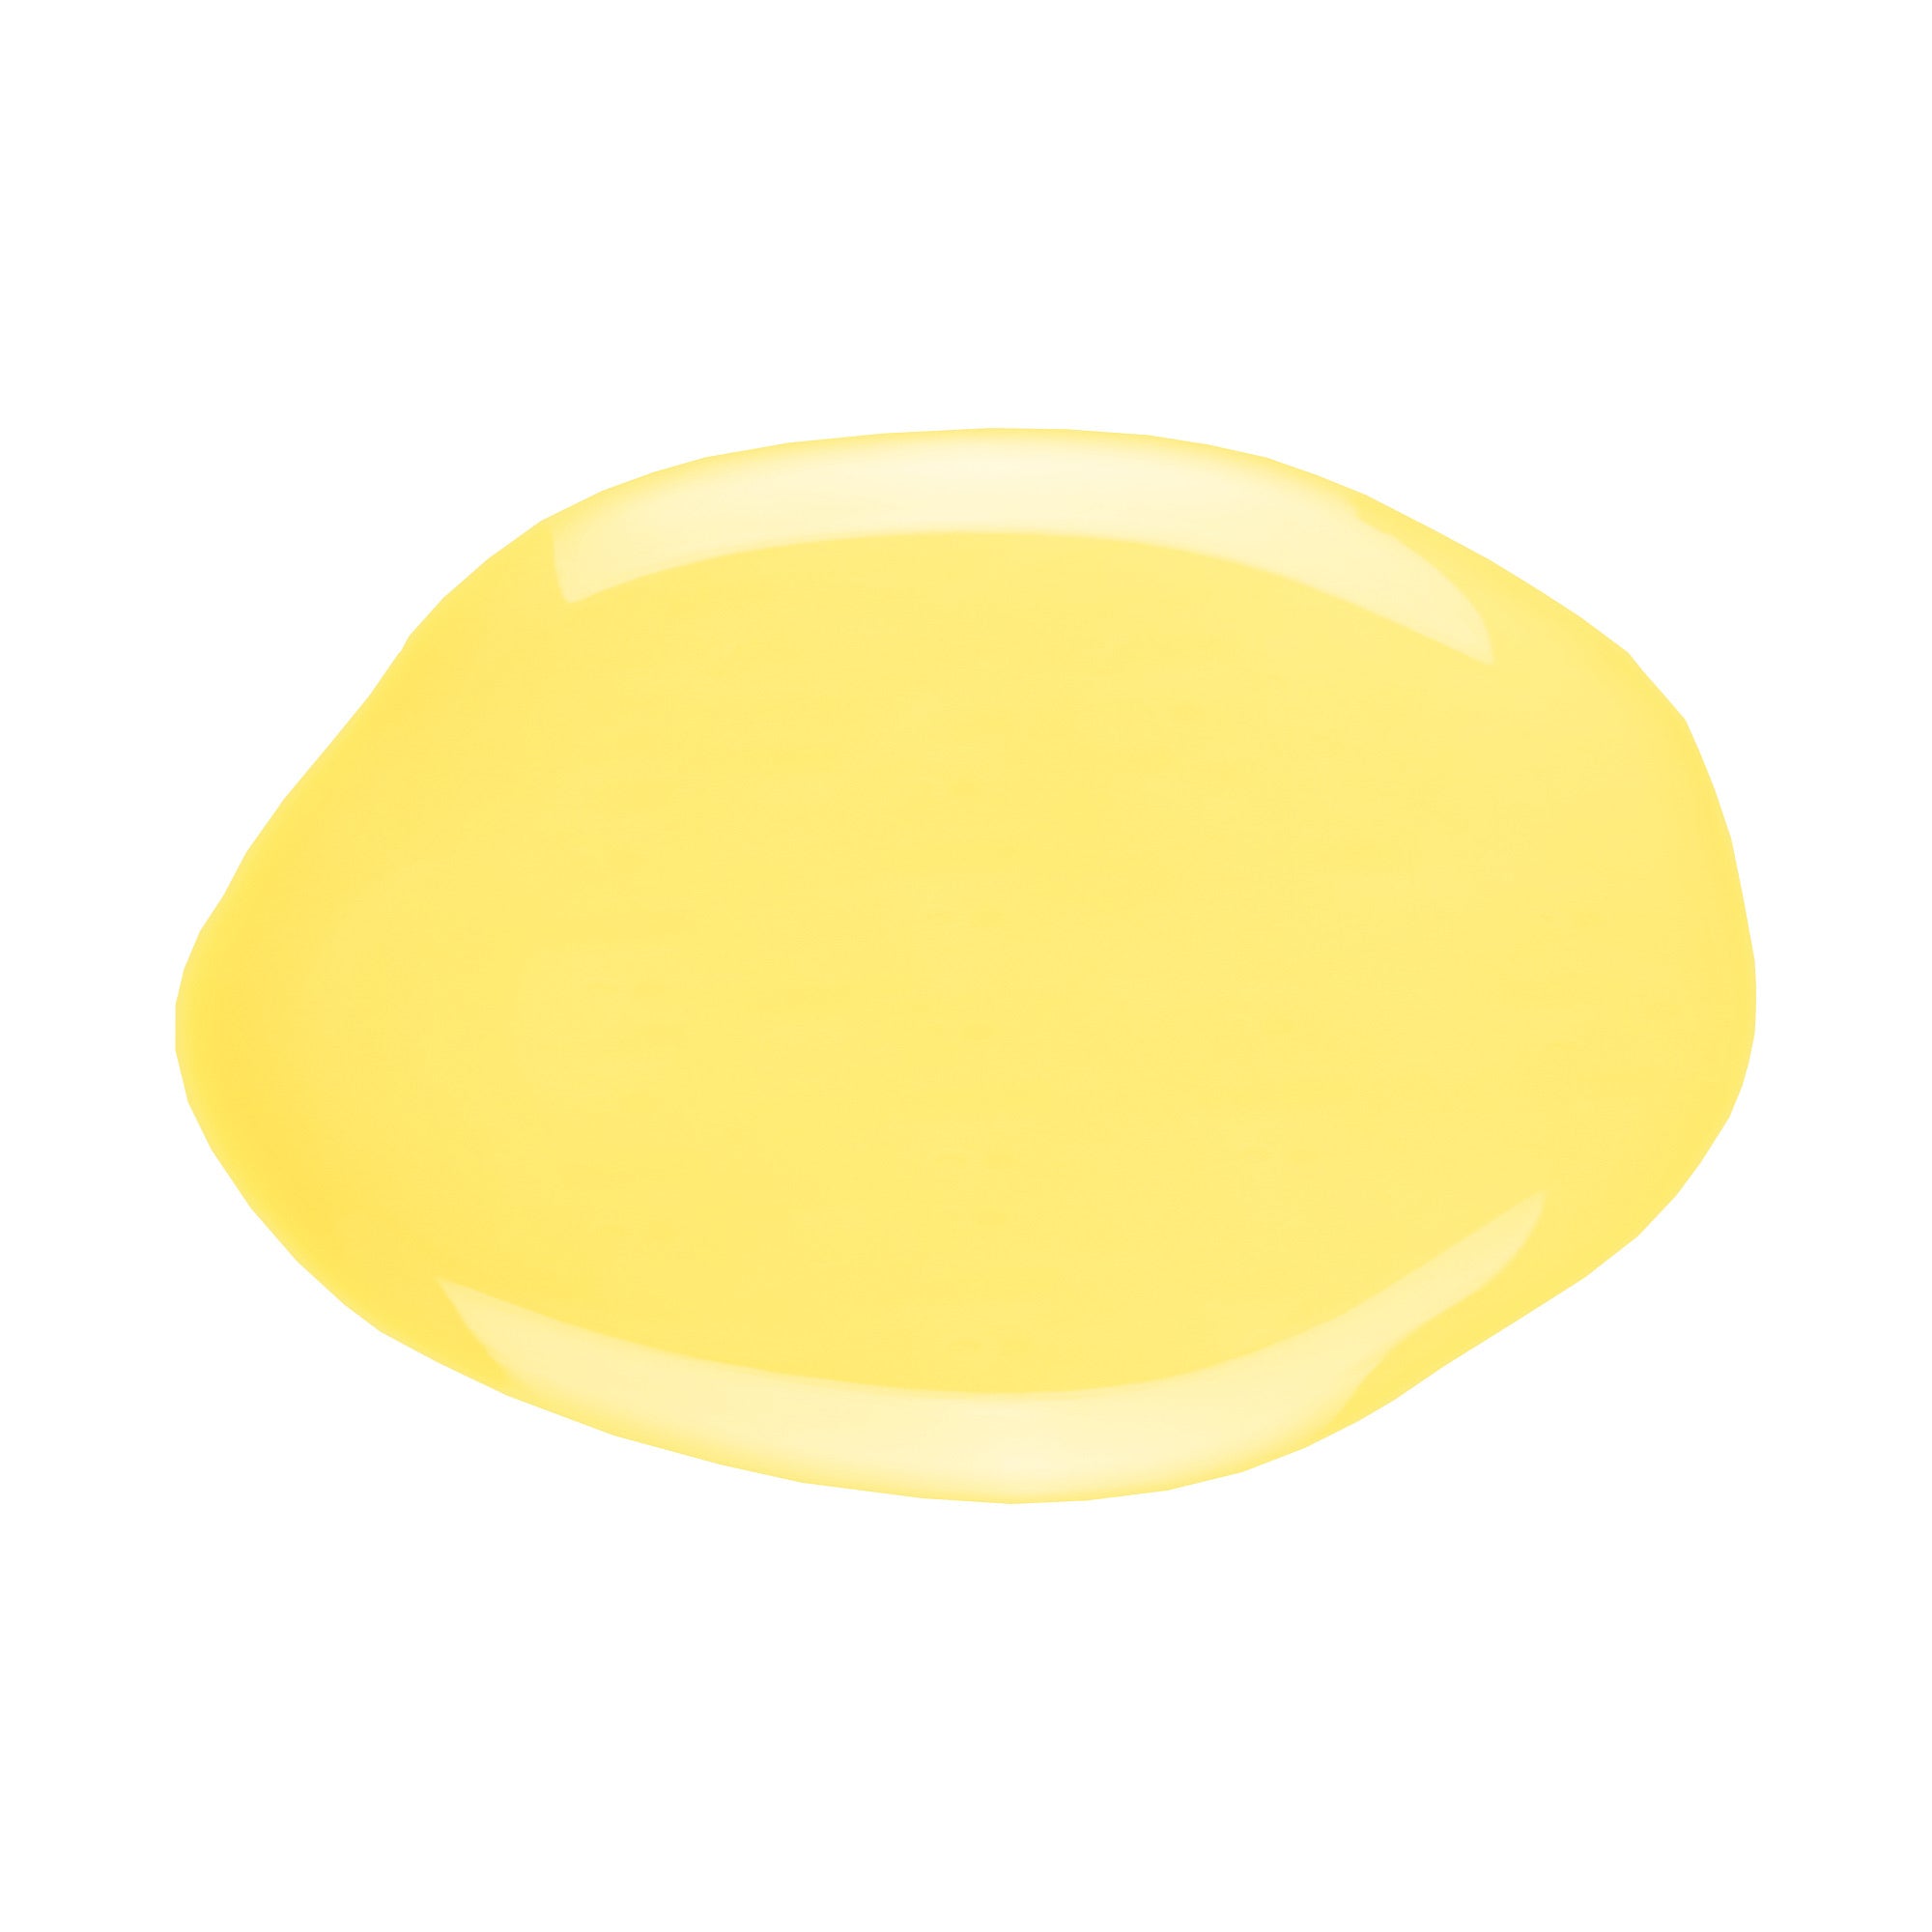 Alix Avien - Nail Polish Gel No.39 (Light Yellow)